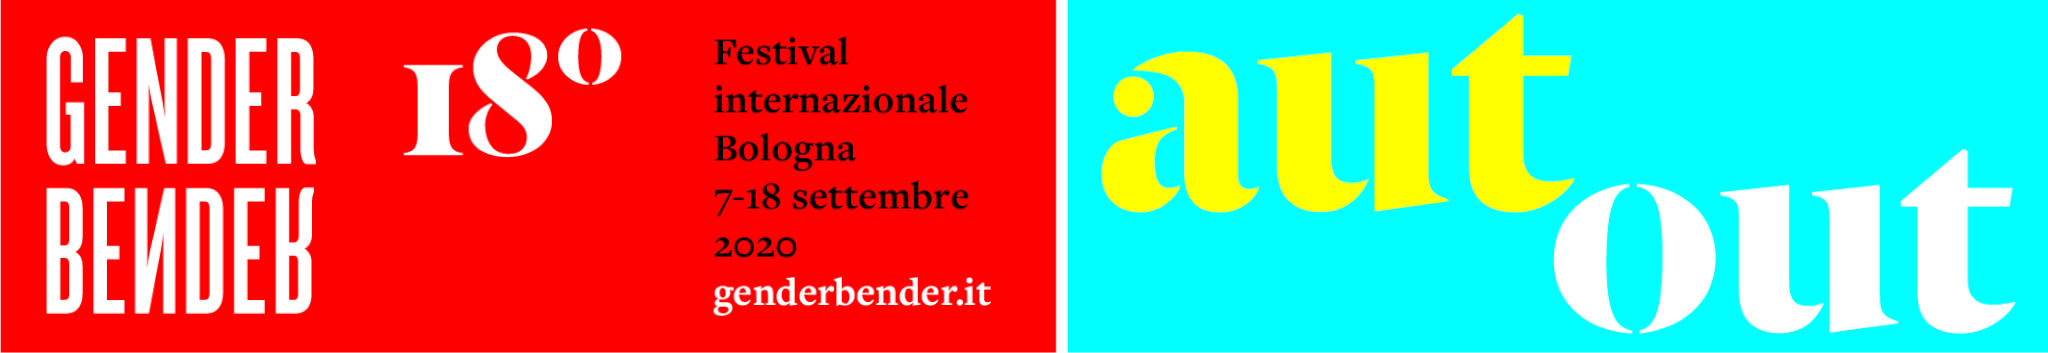 Gender Bender, a Bologna dal 7 al 18 settembre danza, cinema, workshop e incontri al Parco del Cavaticcio - Gender Bender - Gay.it